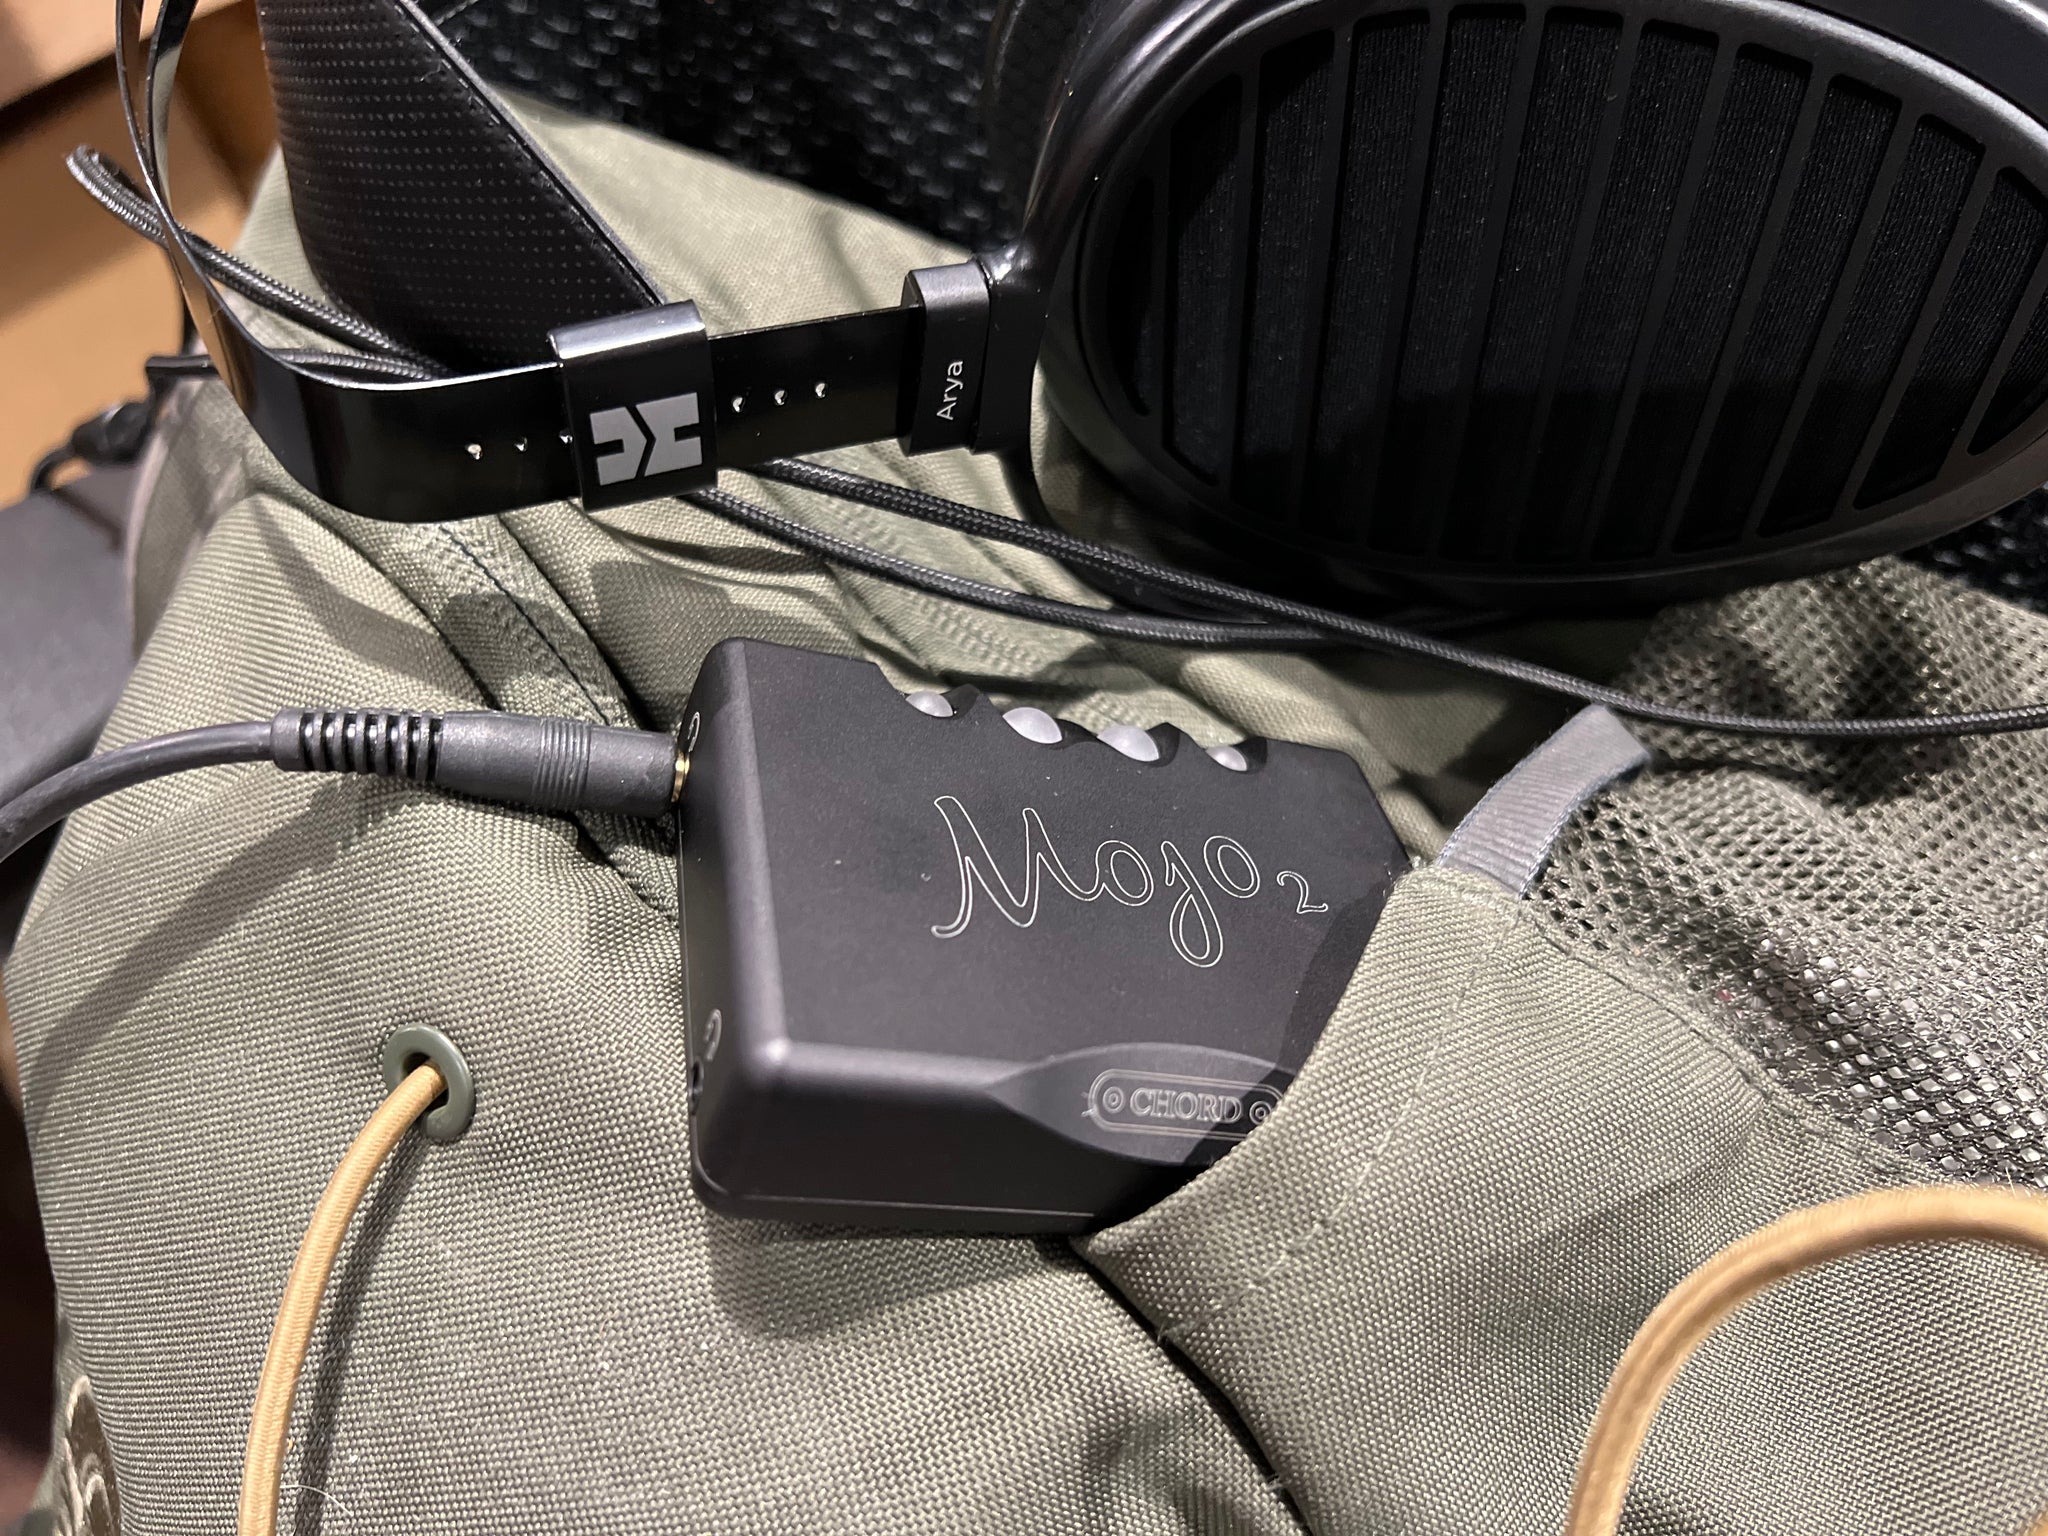 Chord Mojo 2 in canvas bag pocket with HiFiMAN Arya headphones